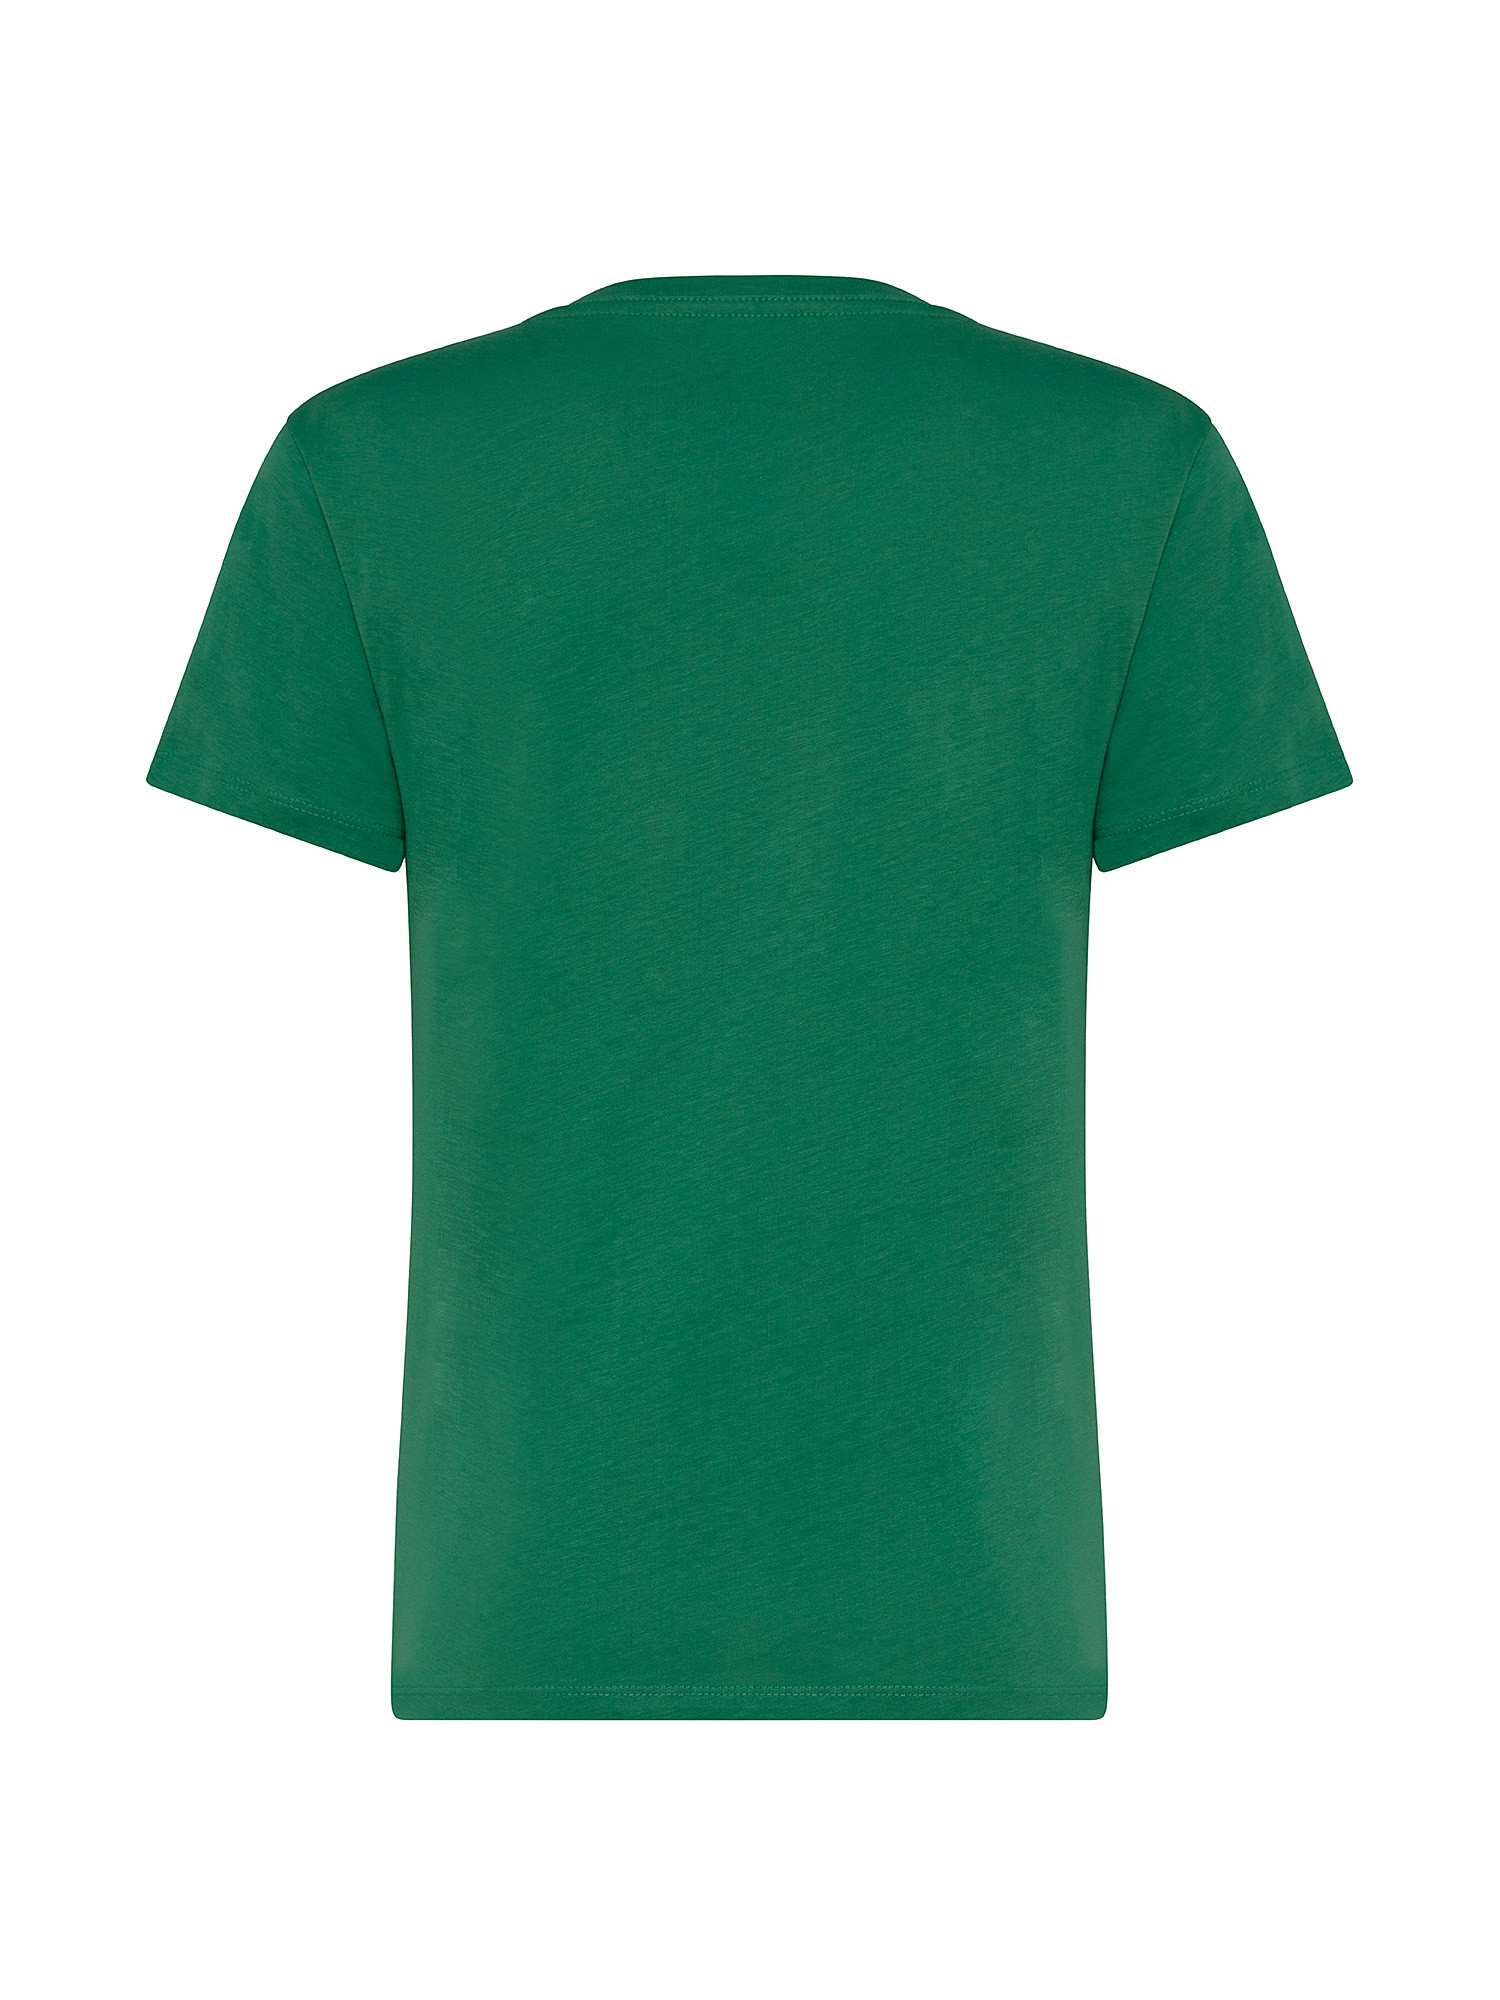 T-shirt con logo stampato, Verde, large image number 1